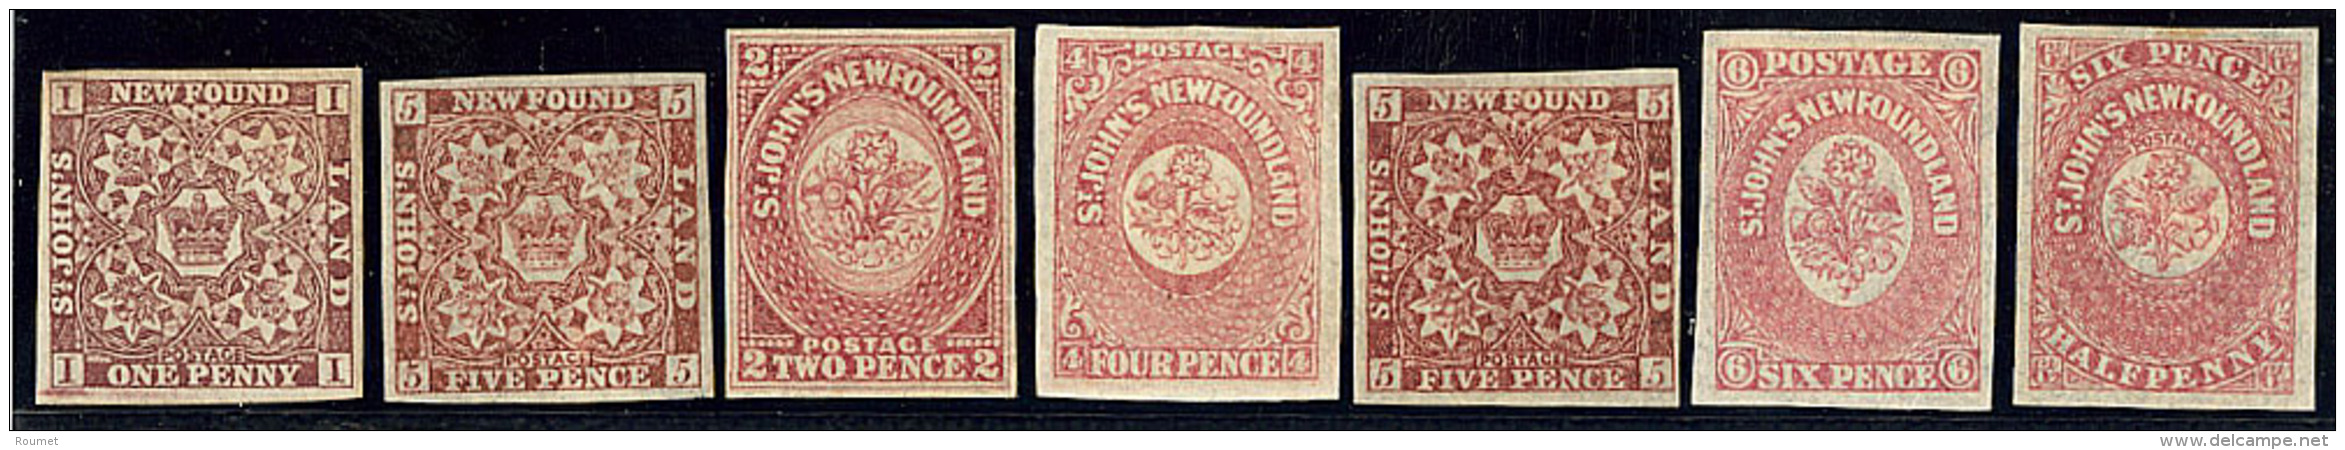 TERRE-NEUVE. Nos 1, 5, 14, 15, 15A, 16, 17. - TB - 1857-1861